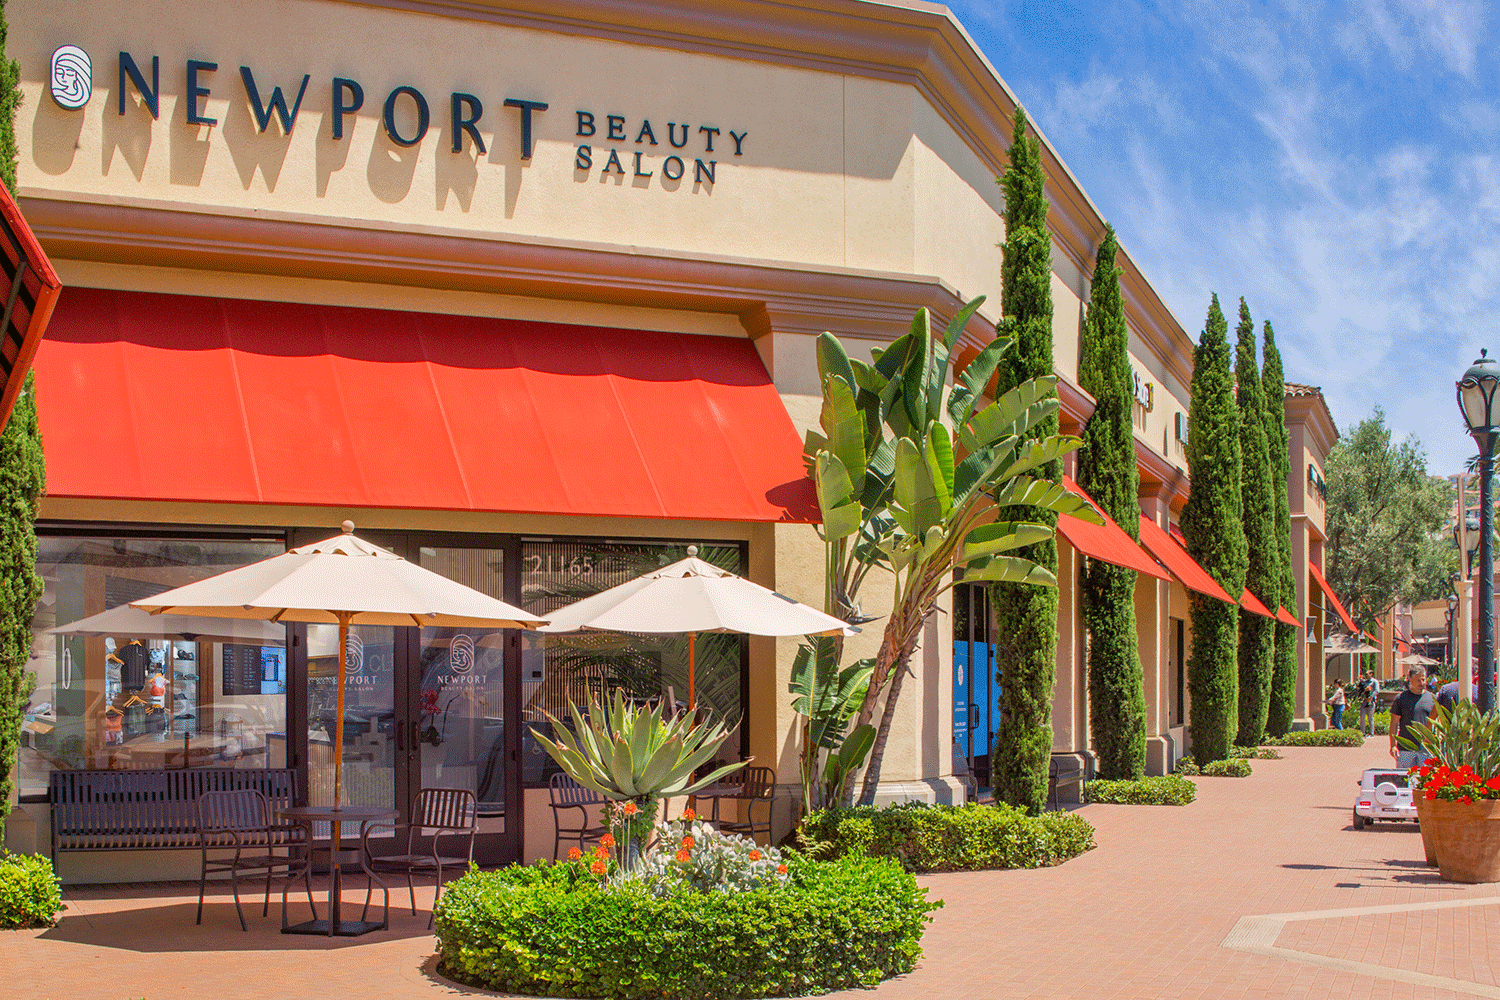  View of Newport Beauty Salon at Newport Coast® Shopping Center